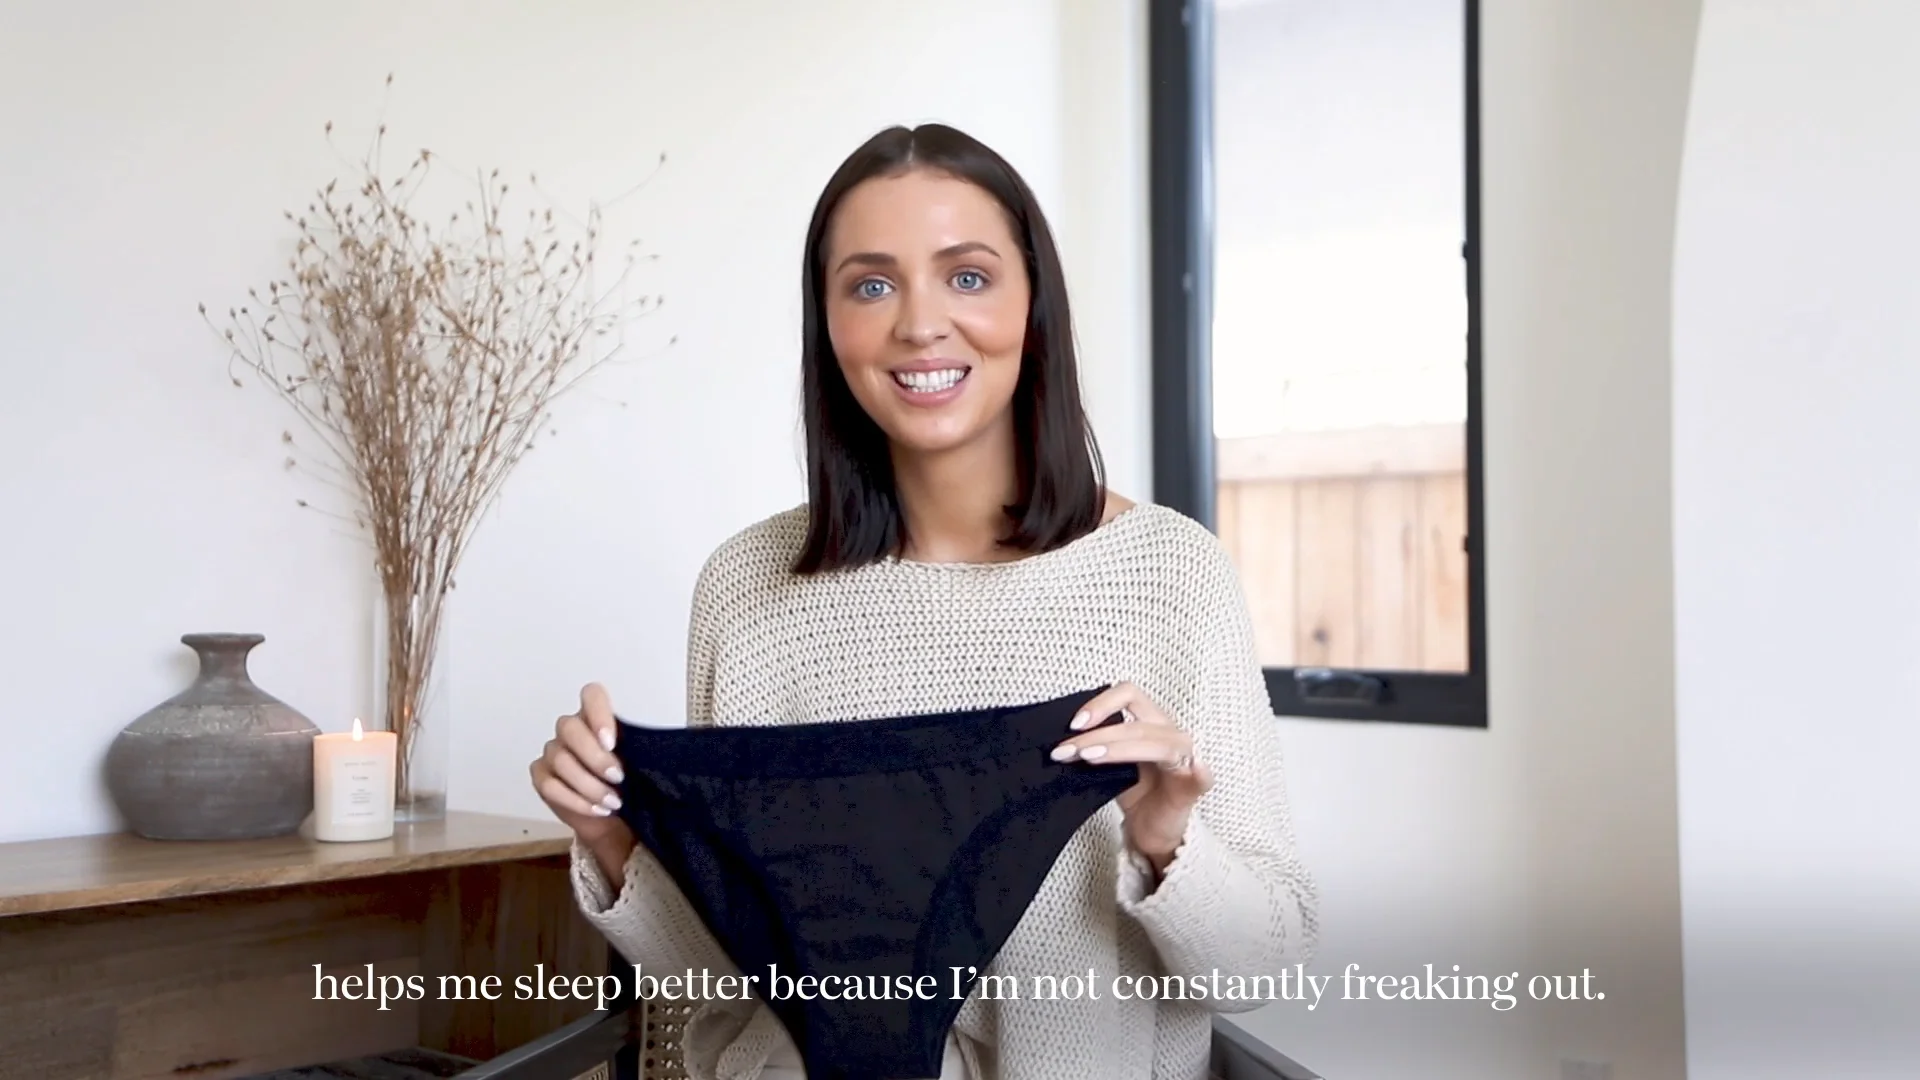 Madison reviews Cora Period Underwear on Vimeo